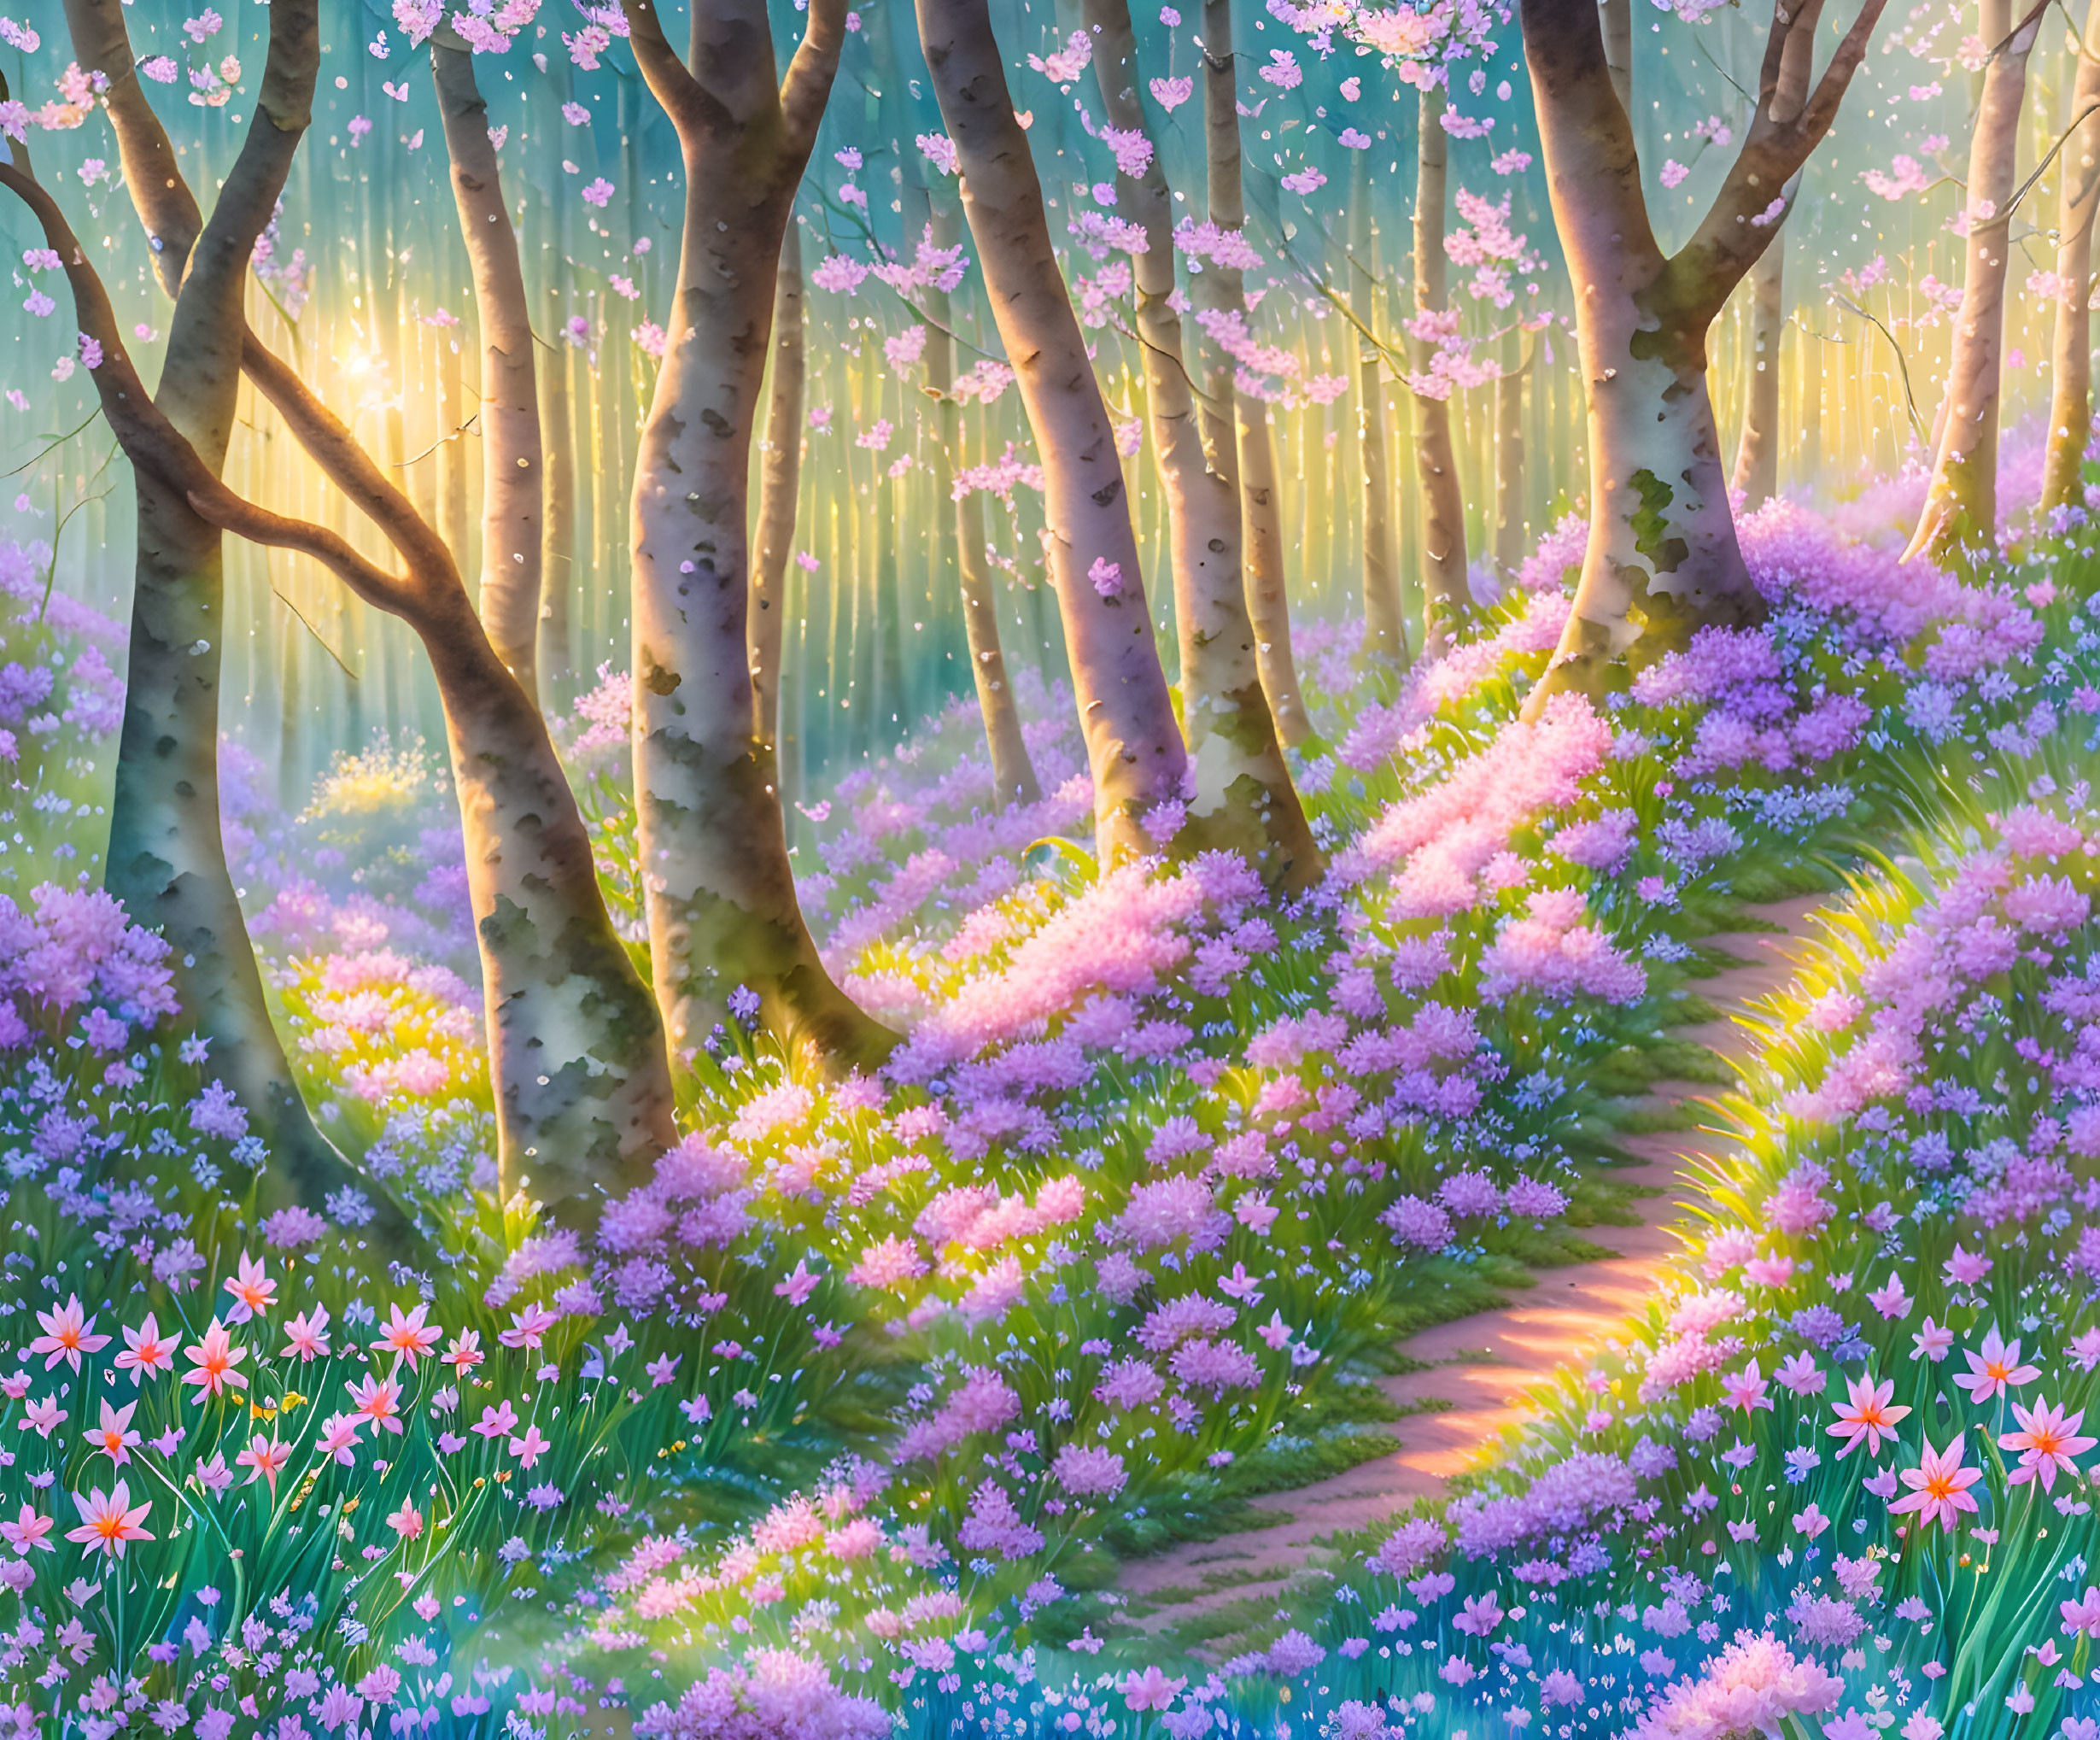 Enchanted Cherry Blossom Trail